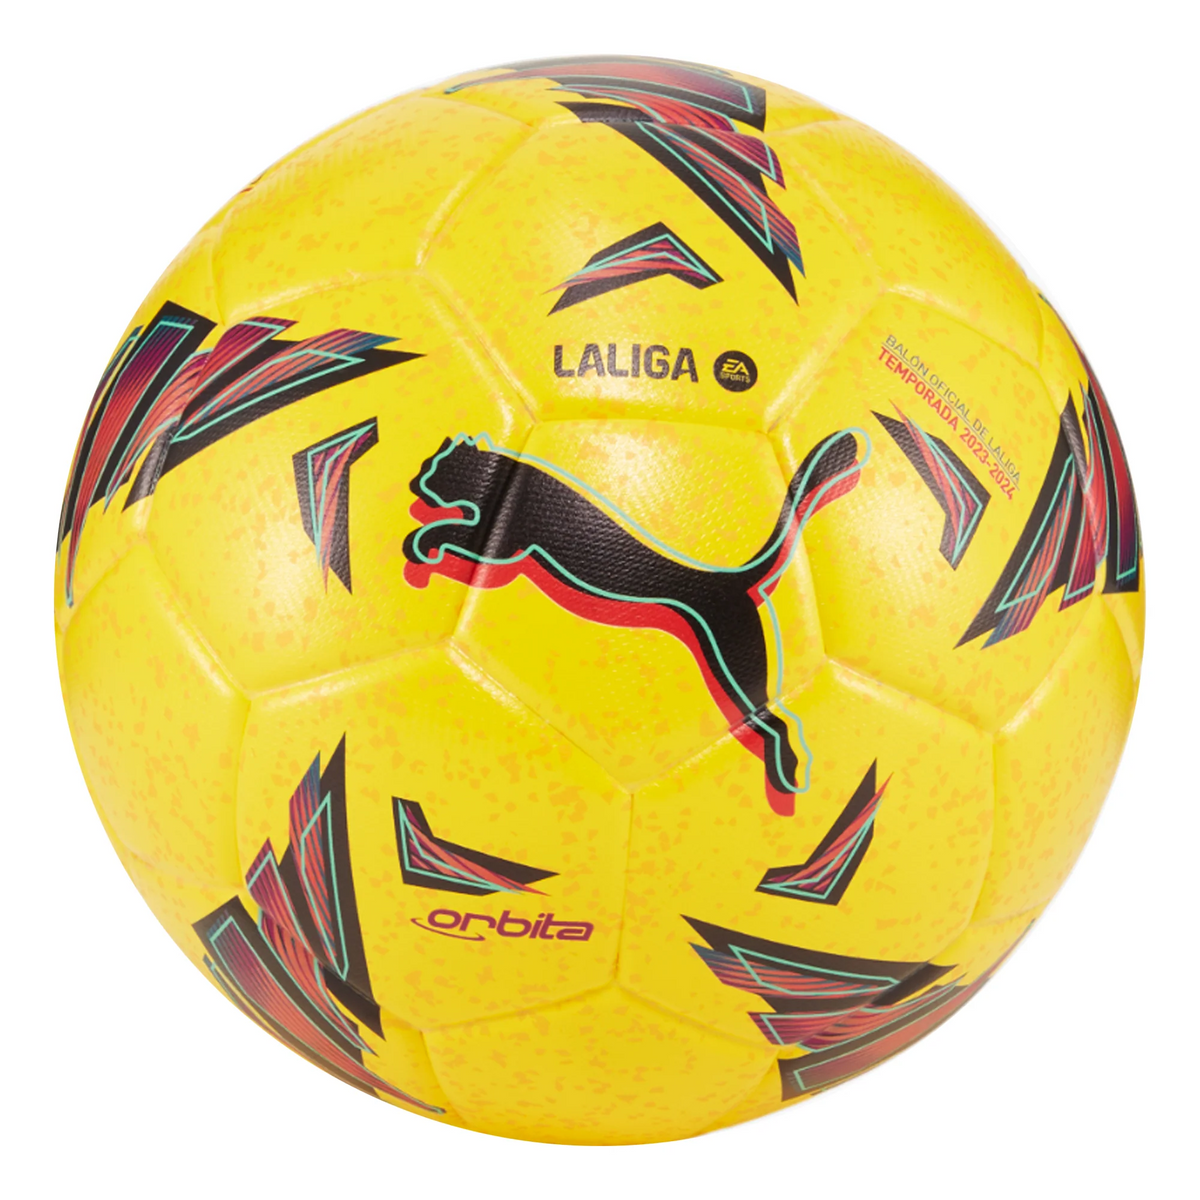 PUMA Orbita La liga 1 Soccer Ball